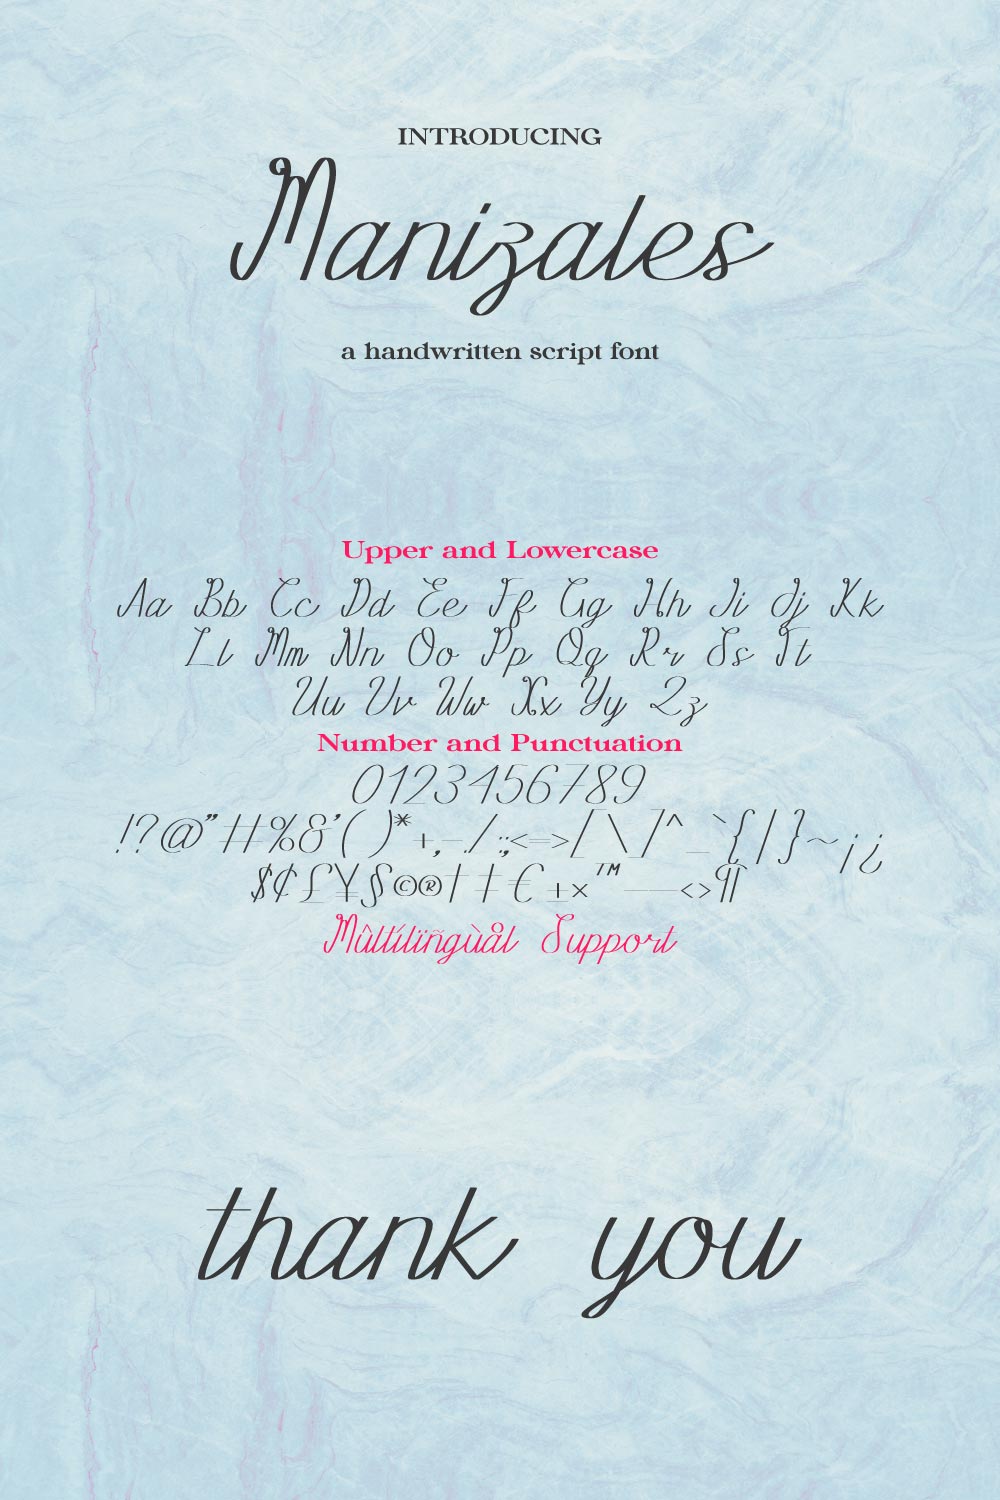 Manizales | Handwritten Script Font pinterest preview image.